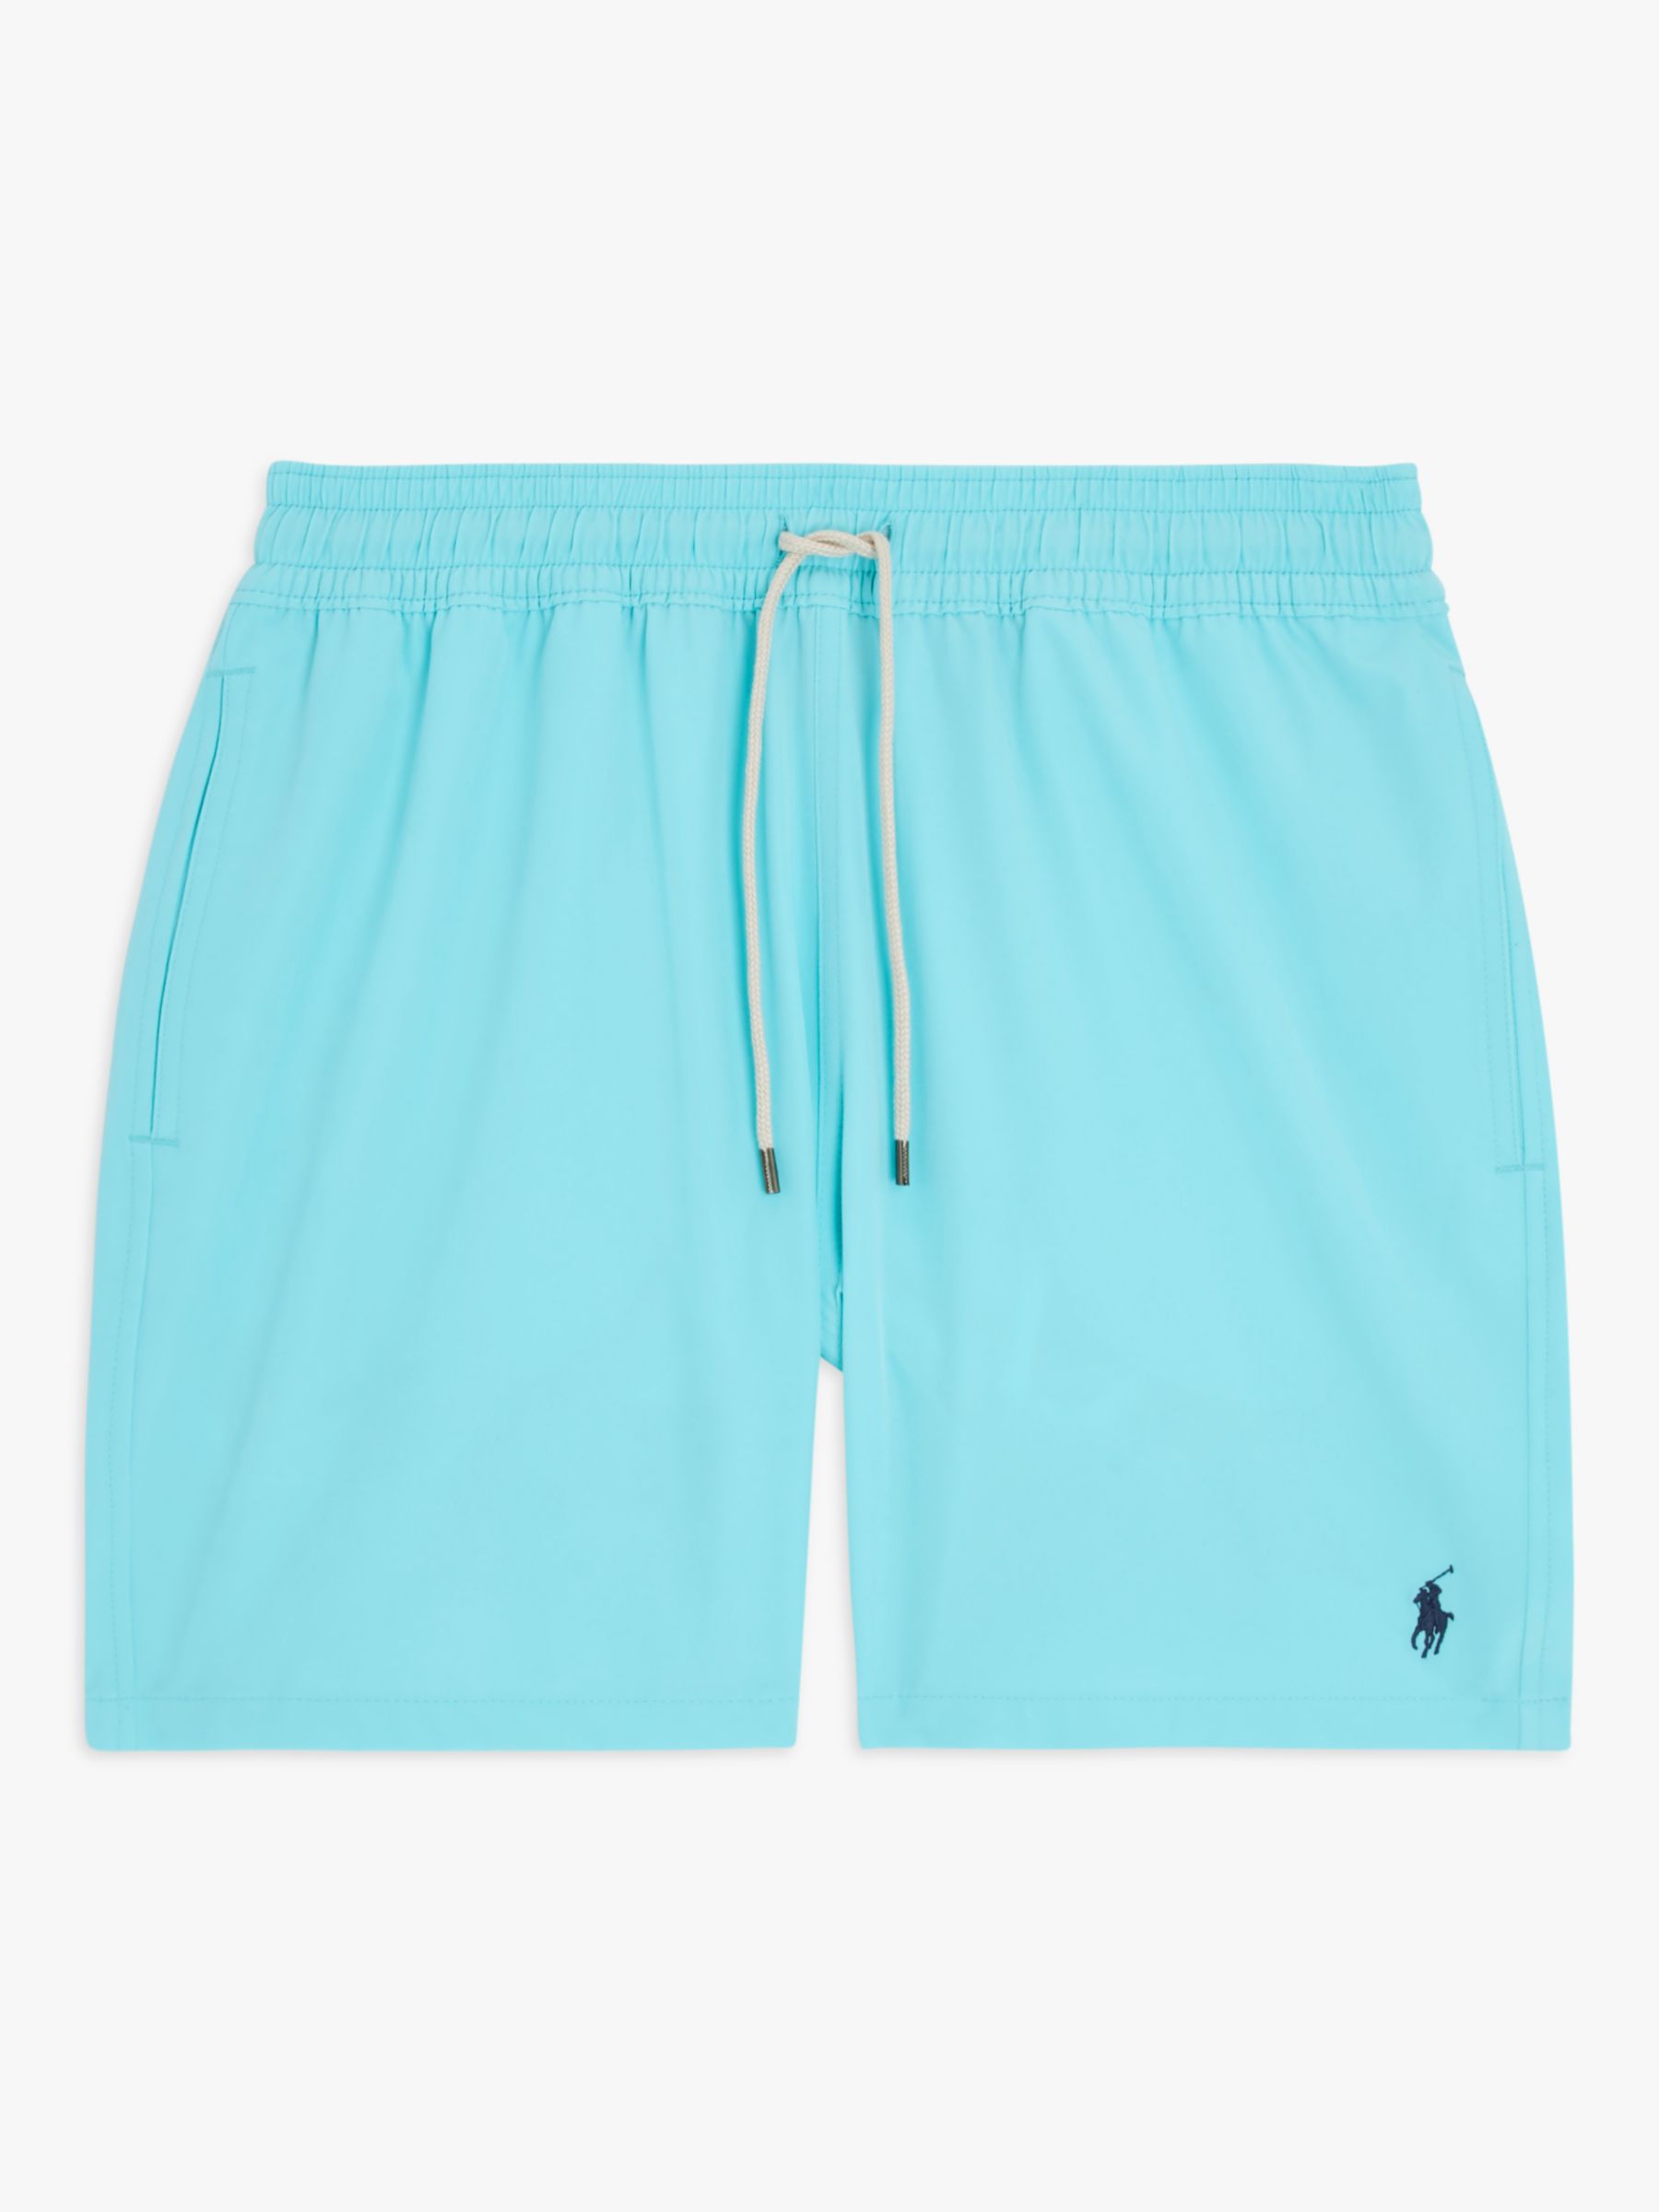 Polo Ralph Lauren Traveller Swim Shorts, Turquoise at John Lewis & Partners